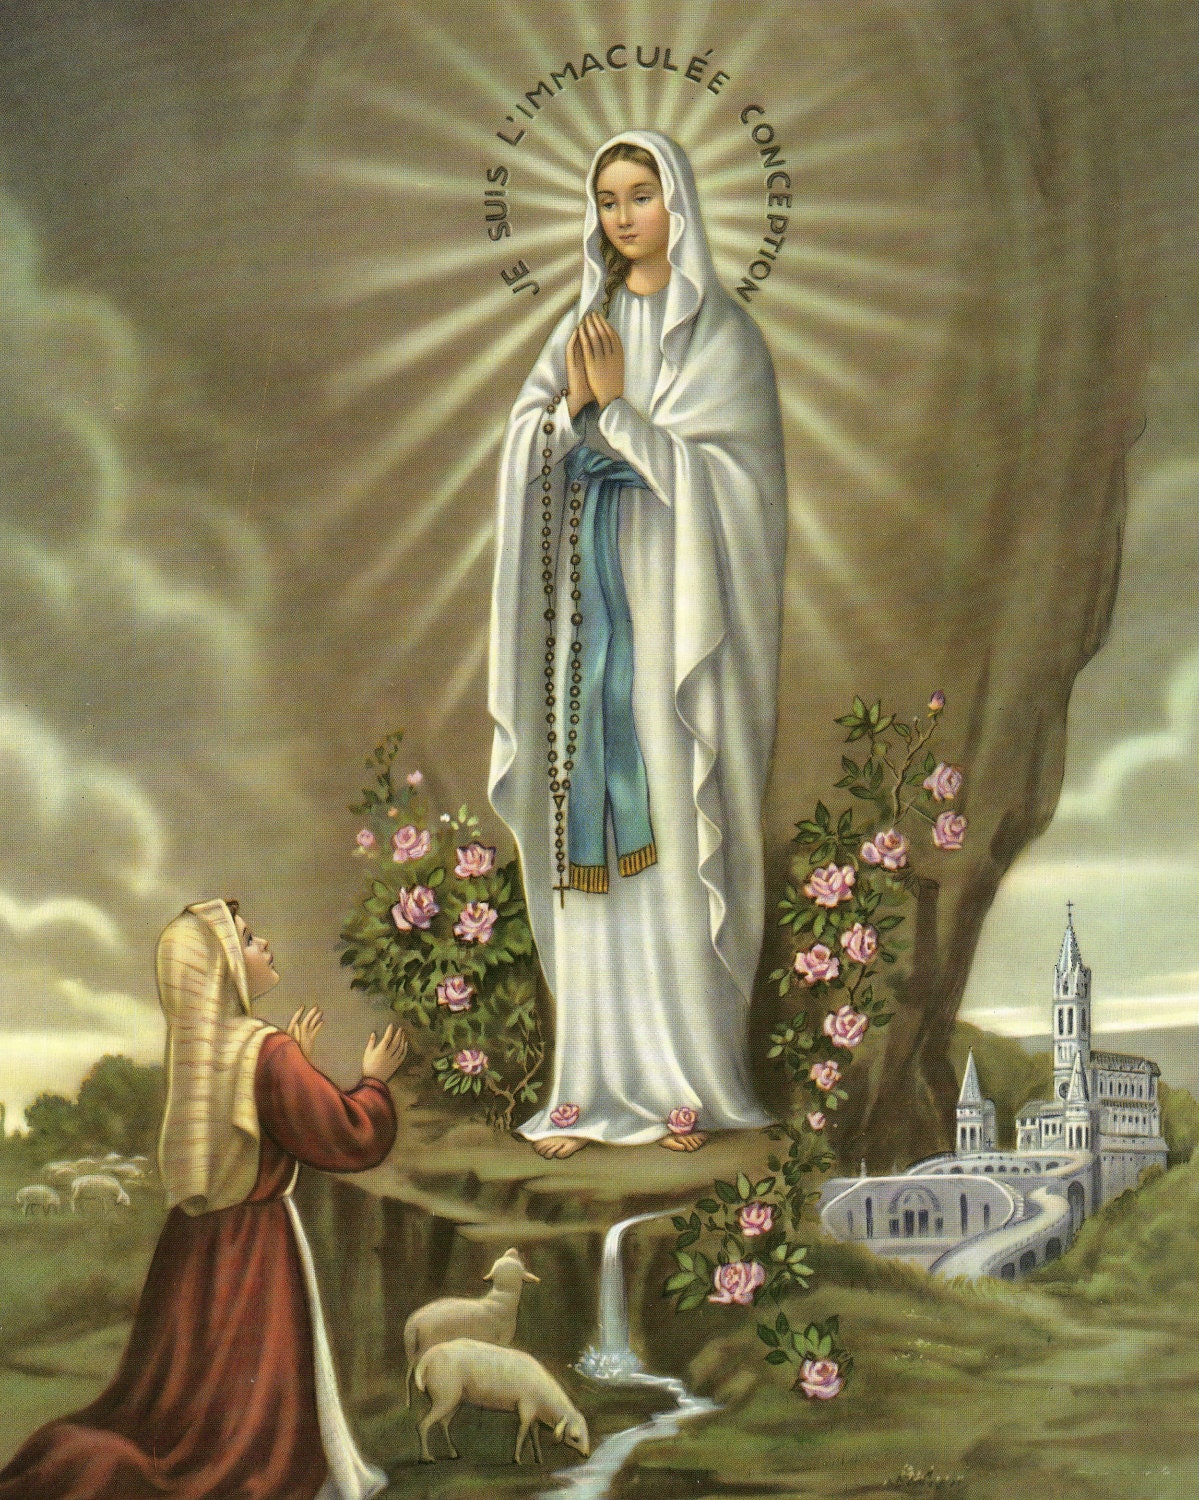 Our Lady of Lourdes with Saint Bernadette picture Catholic Art